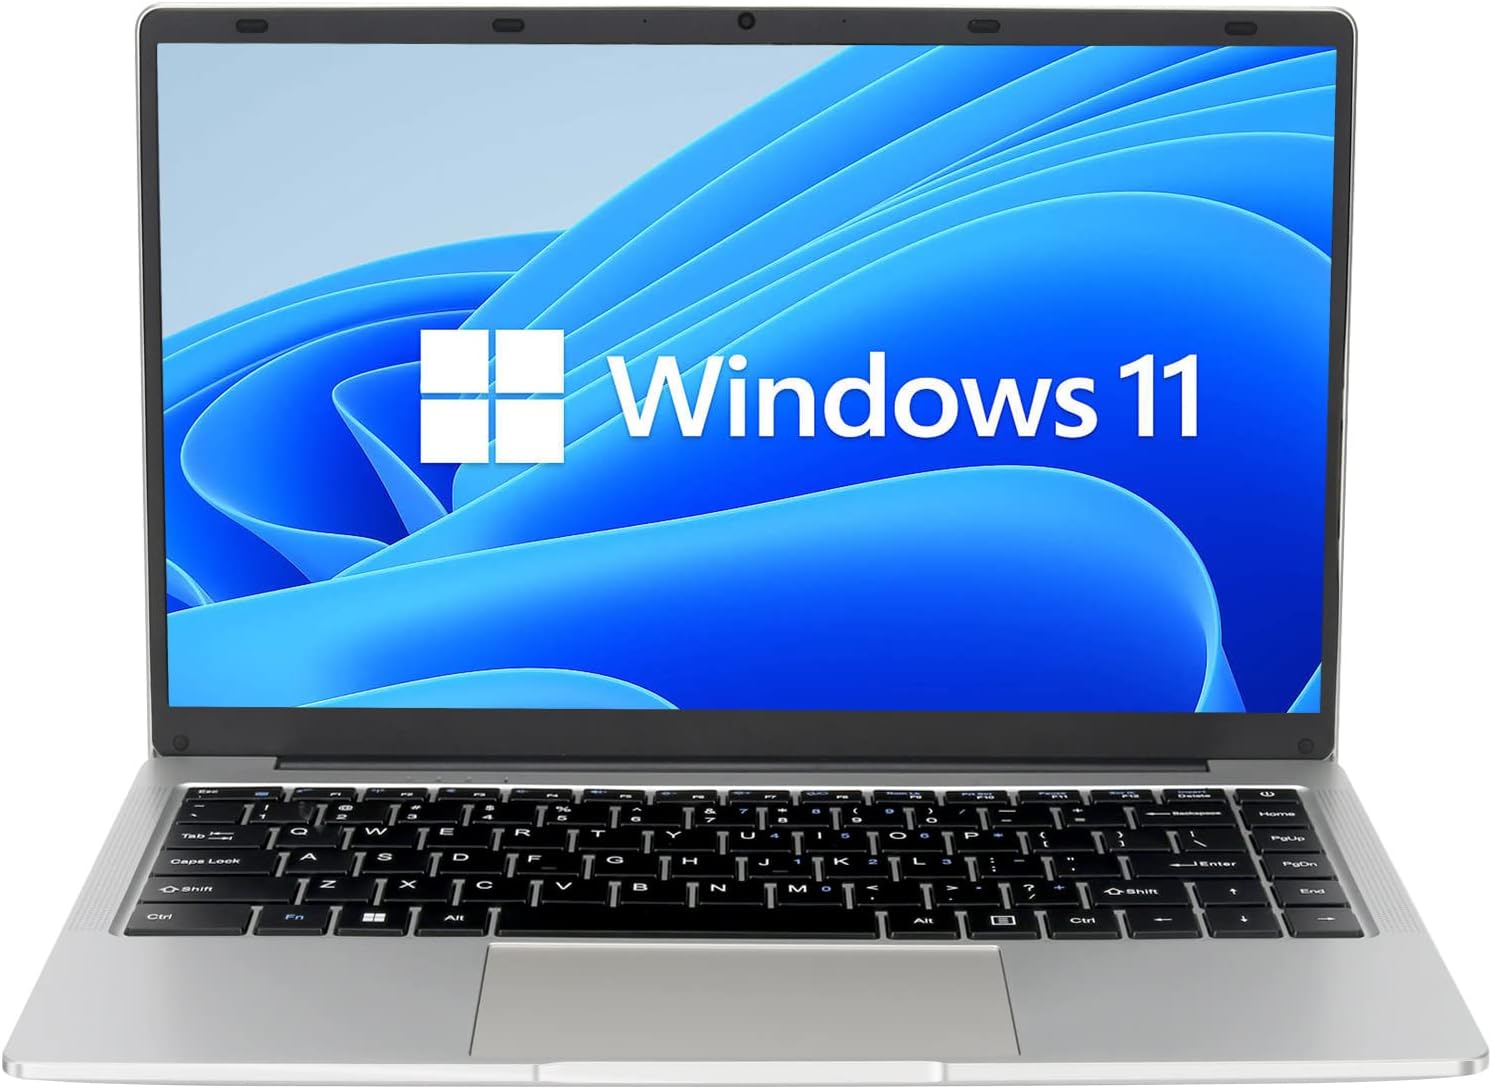 Laptop 14.1 Inch Windows 11 Notebook, Auusda Laptop Full Hd 1920*1080 Ips 100% S Rgb Display, Intel J4105 Quad Core, 8 Gb Lpddr4 And 256 Gb Ssd, Usb 3.0, 5 G Hz 